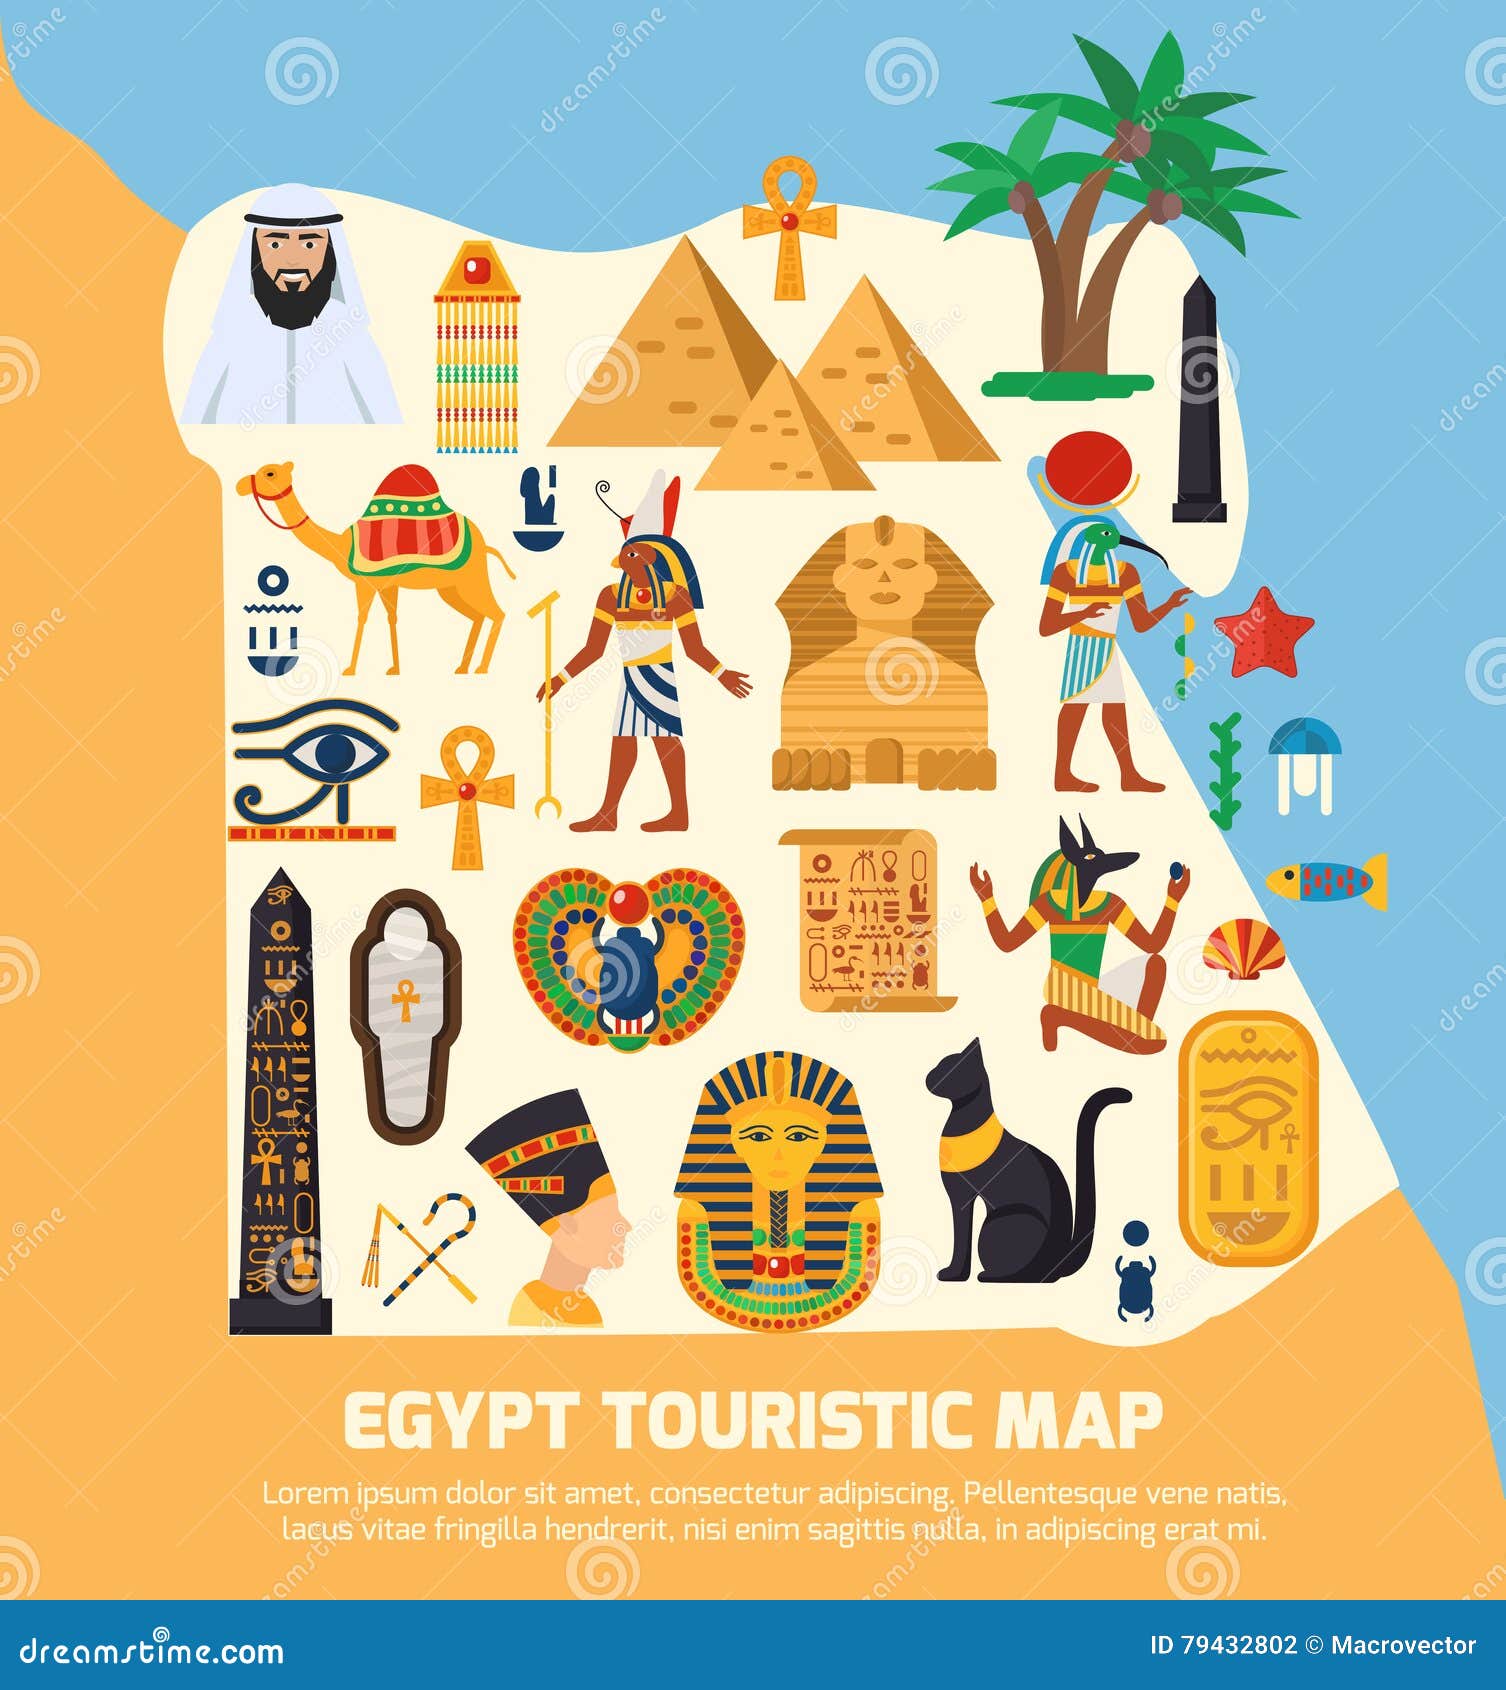 egypt touristic map